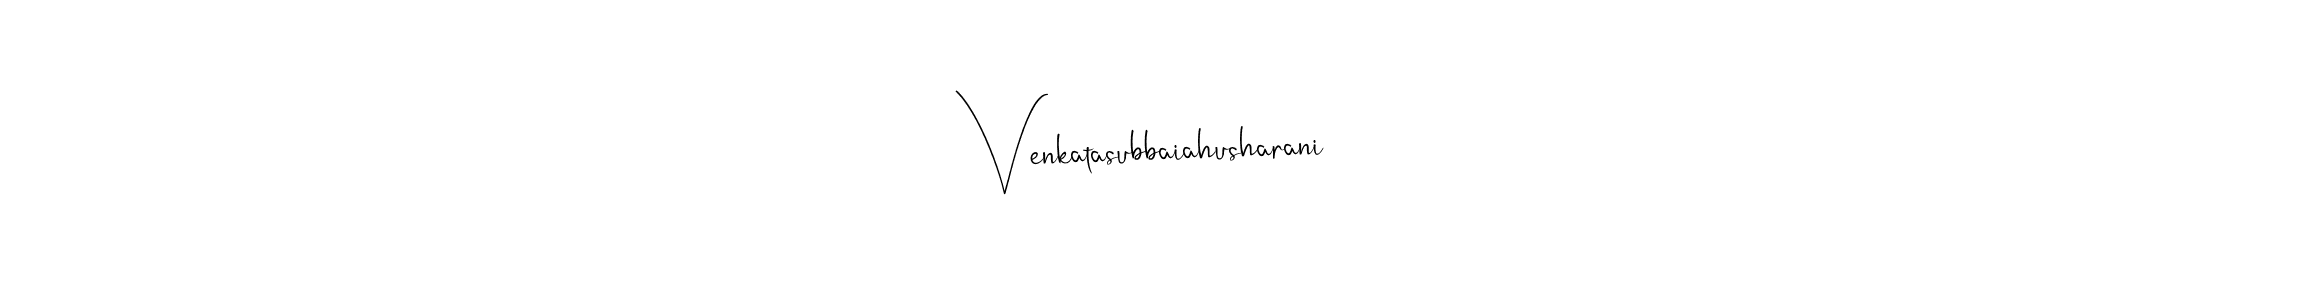 How to Draw Venkatasubbaiahusharani signature style? Andilay-7BmLP is a latest design signature styles for name Venkatasubbaiahusharani. Venkatasubbaiahusharani signature style 4 images and pictures png